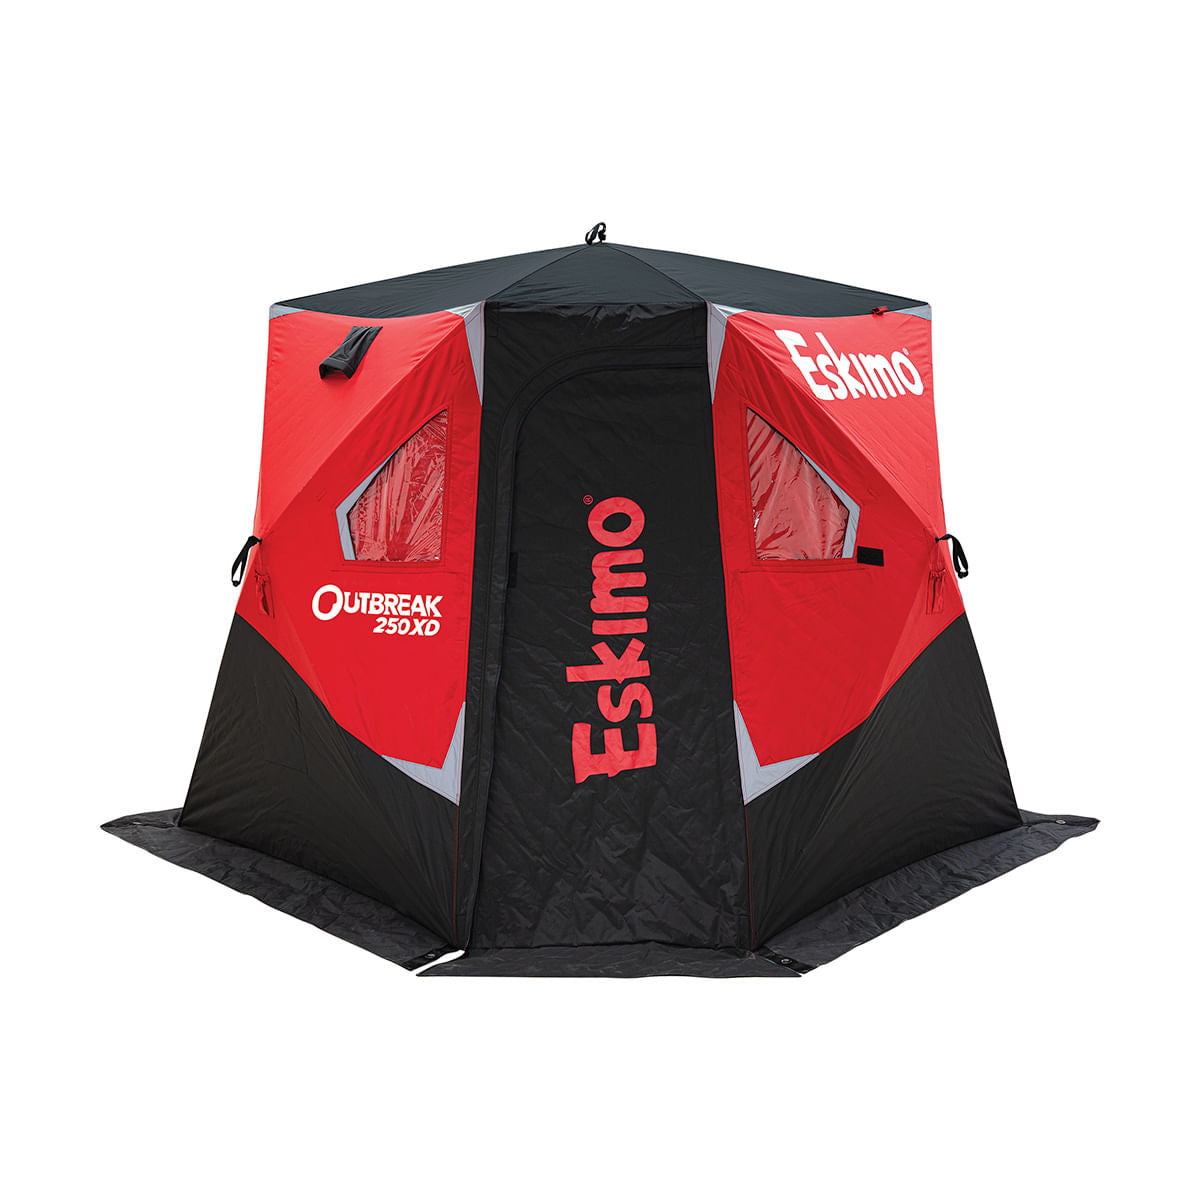 Eskimo Outbreak 250XD Insulated Shelter